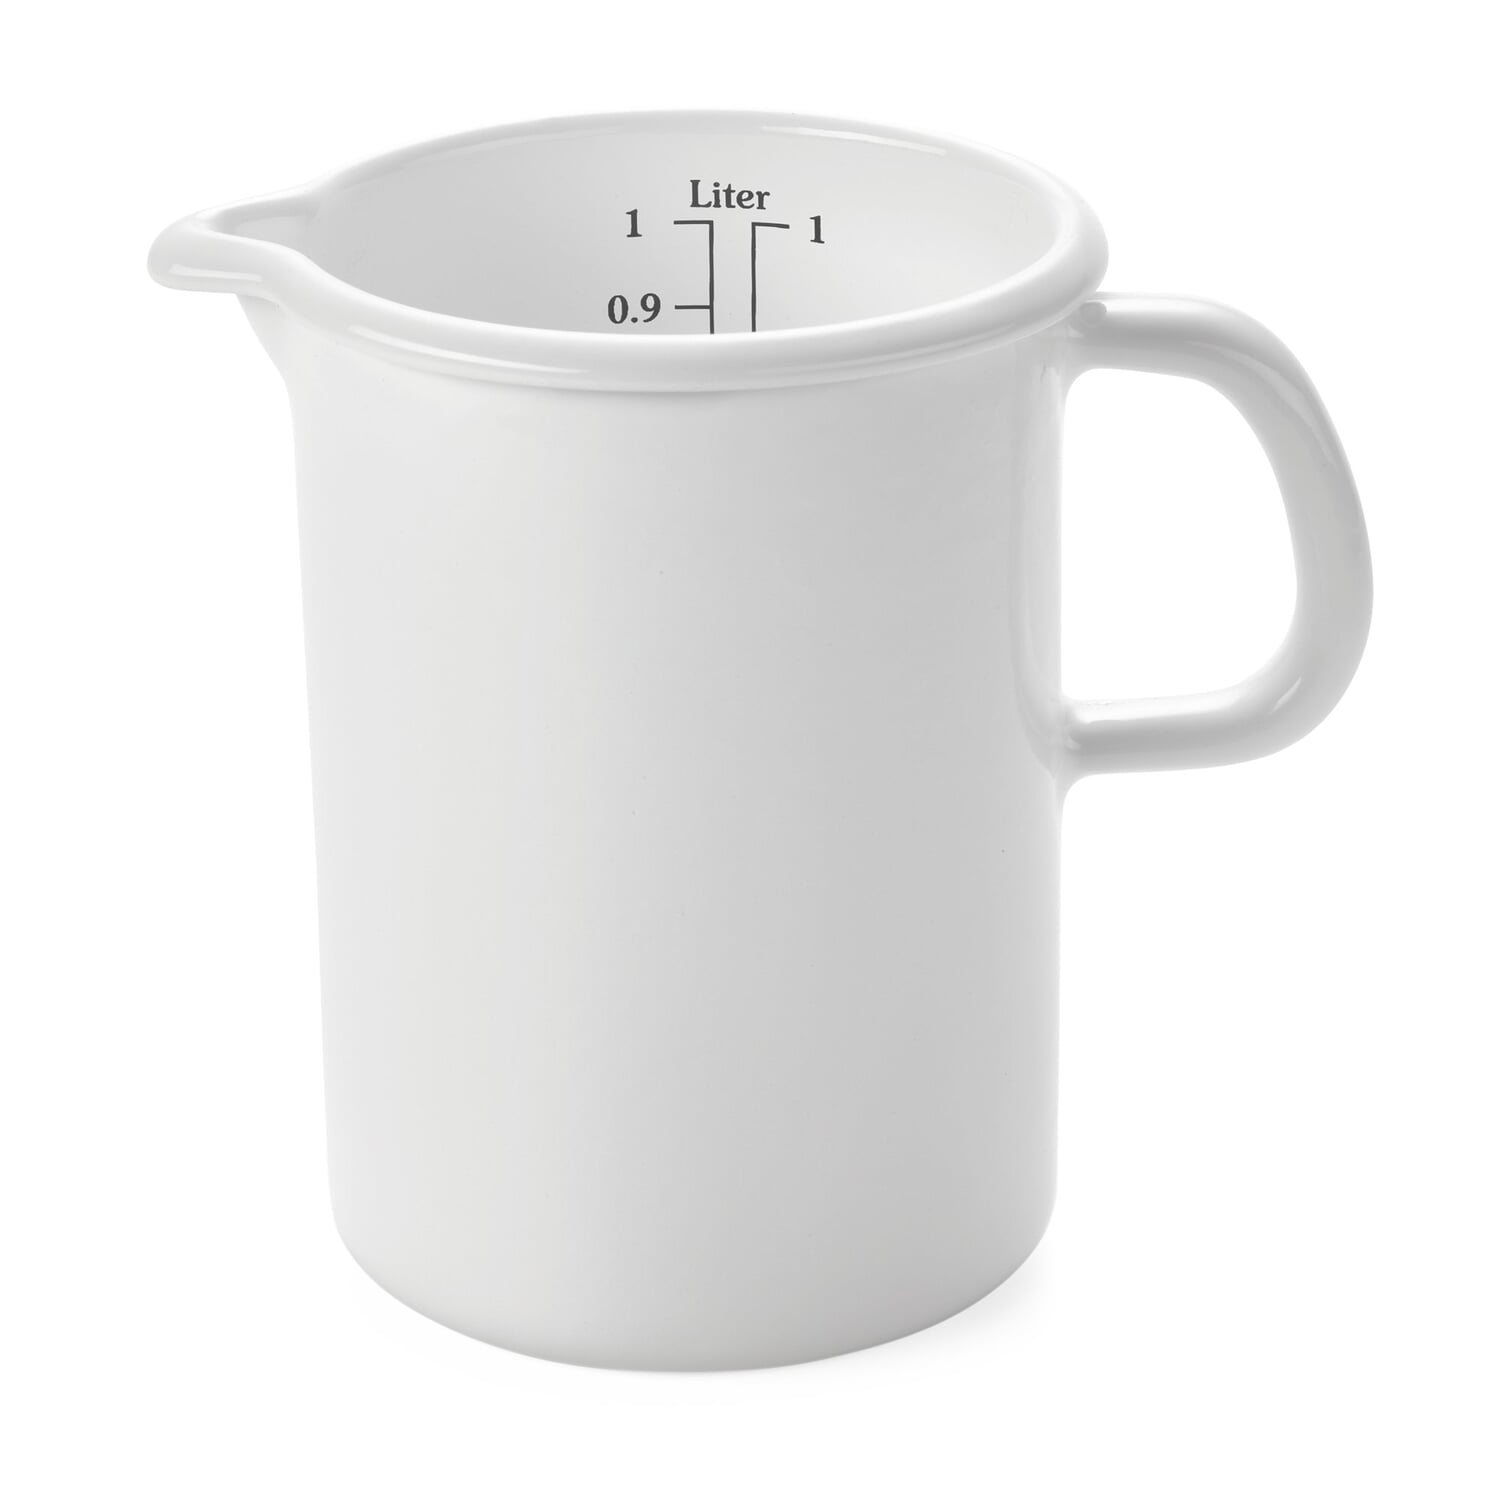 https://assets.manufactum.de/p/034/034487/34487_01.jpg/riess-measuring-cup-enamel.jpg?profile=pdsmain_1500